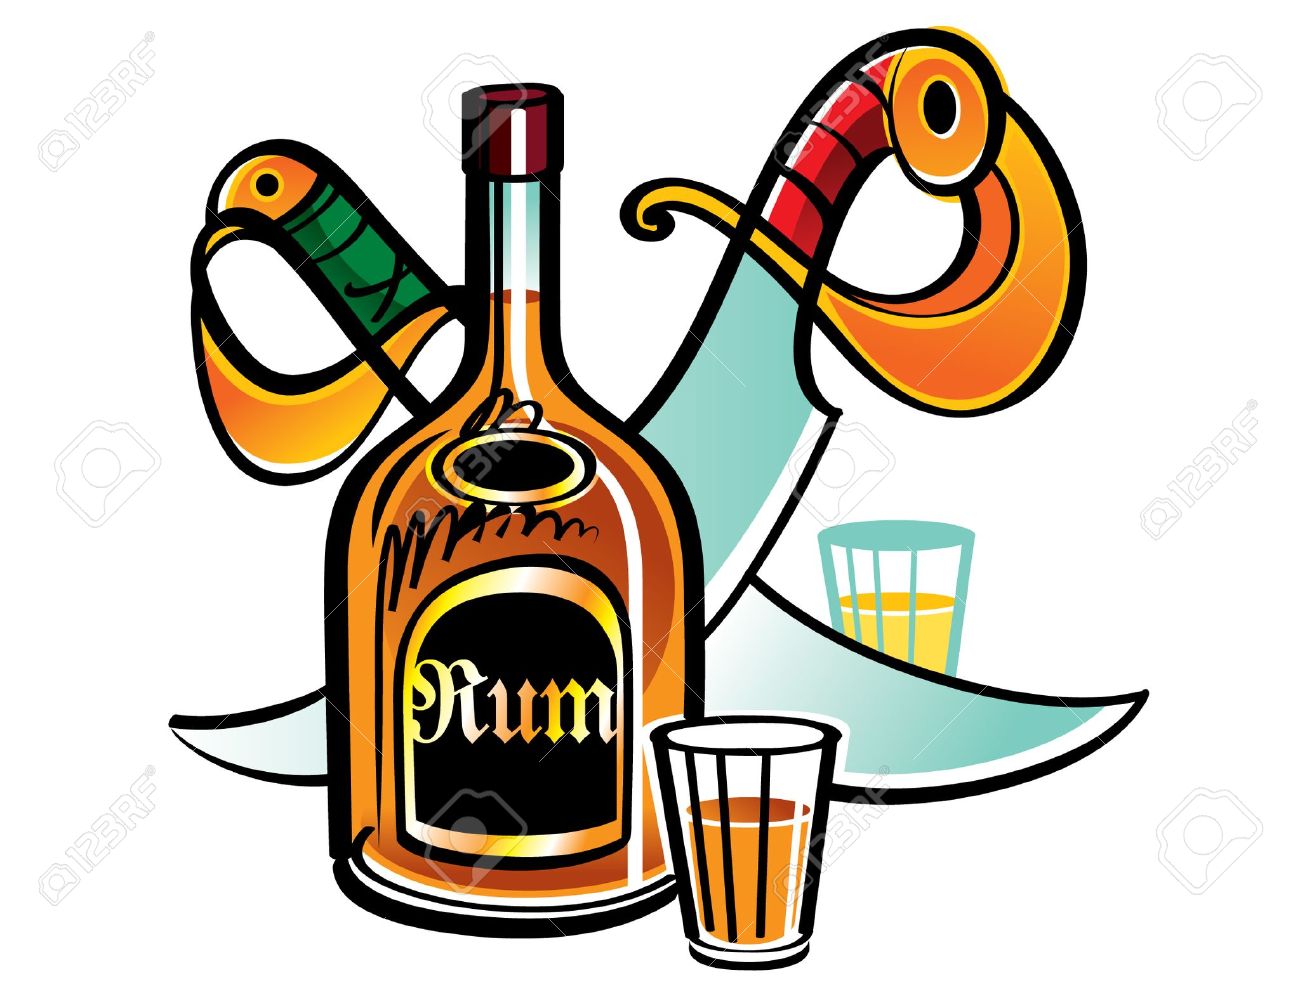 Clipart Rum Bottle.